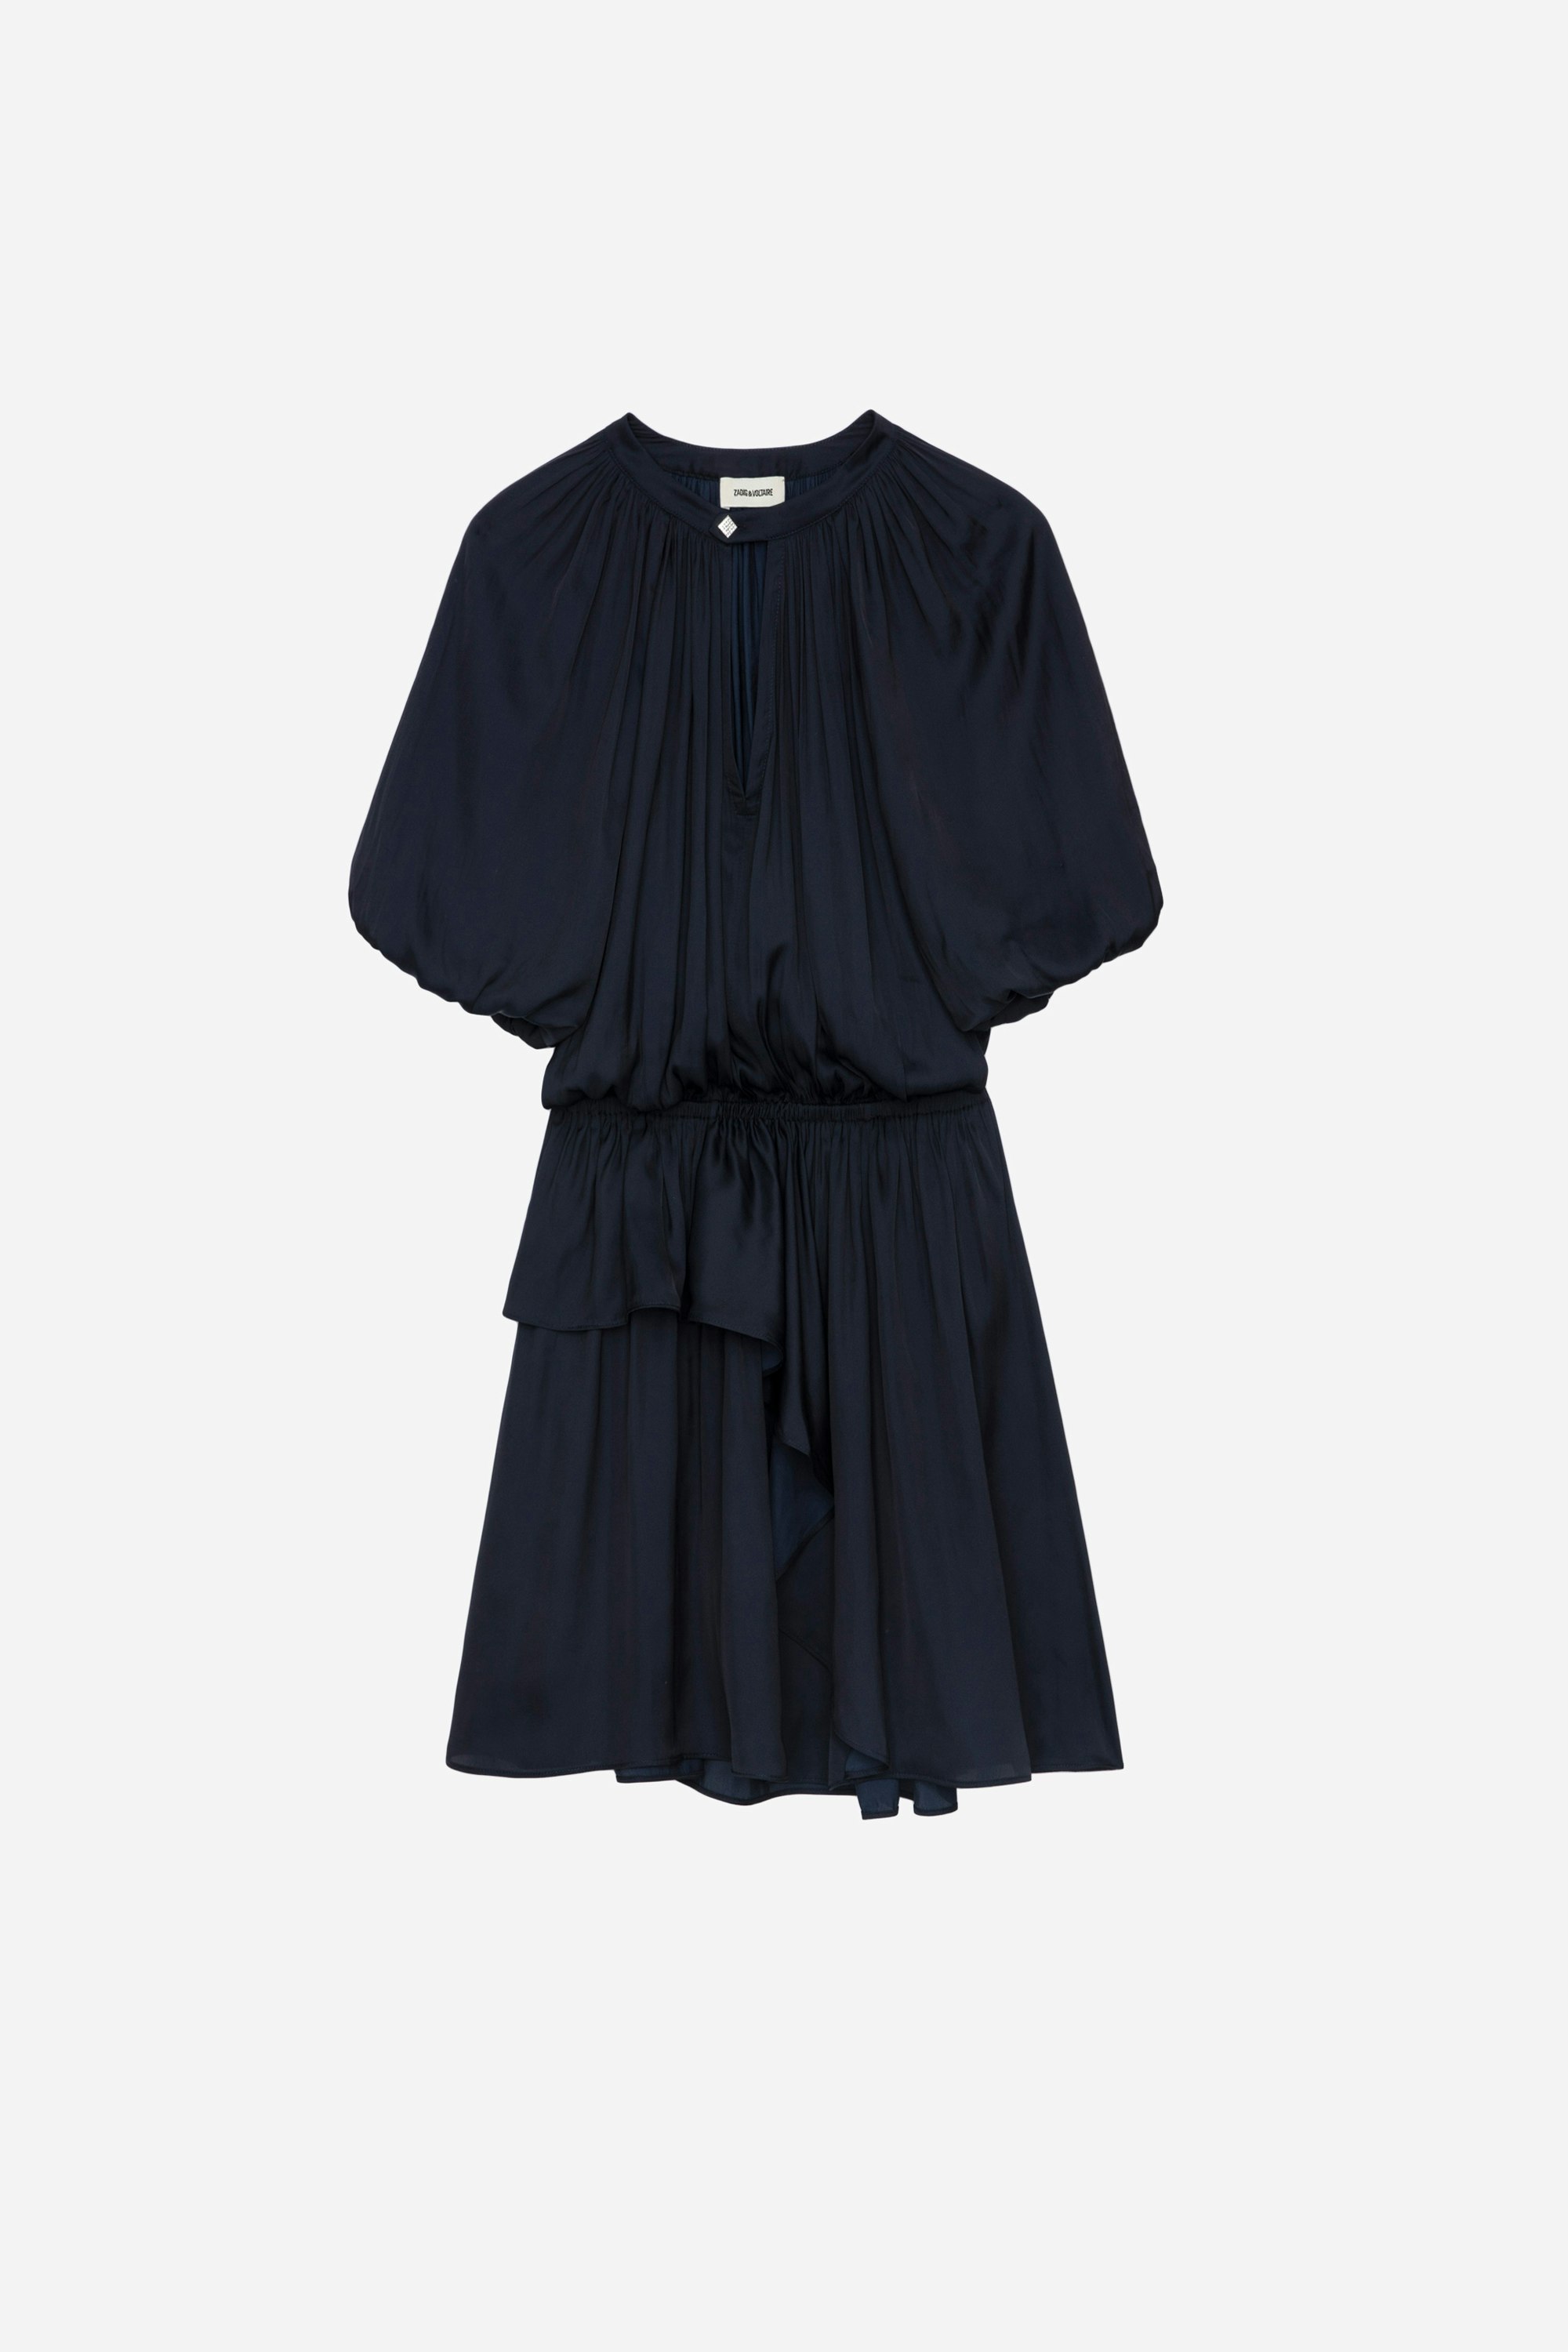 Romina Satin Dress Women’s short navy blue satin dress with balloon sleeves and asymmetric skirt with ruffles.